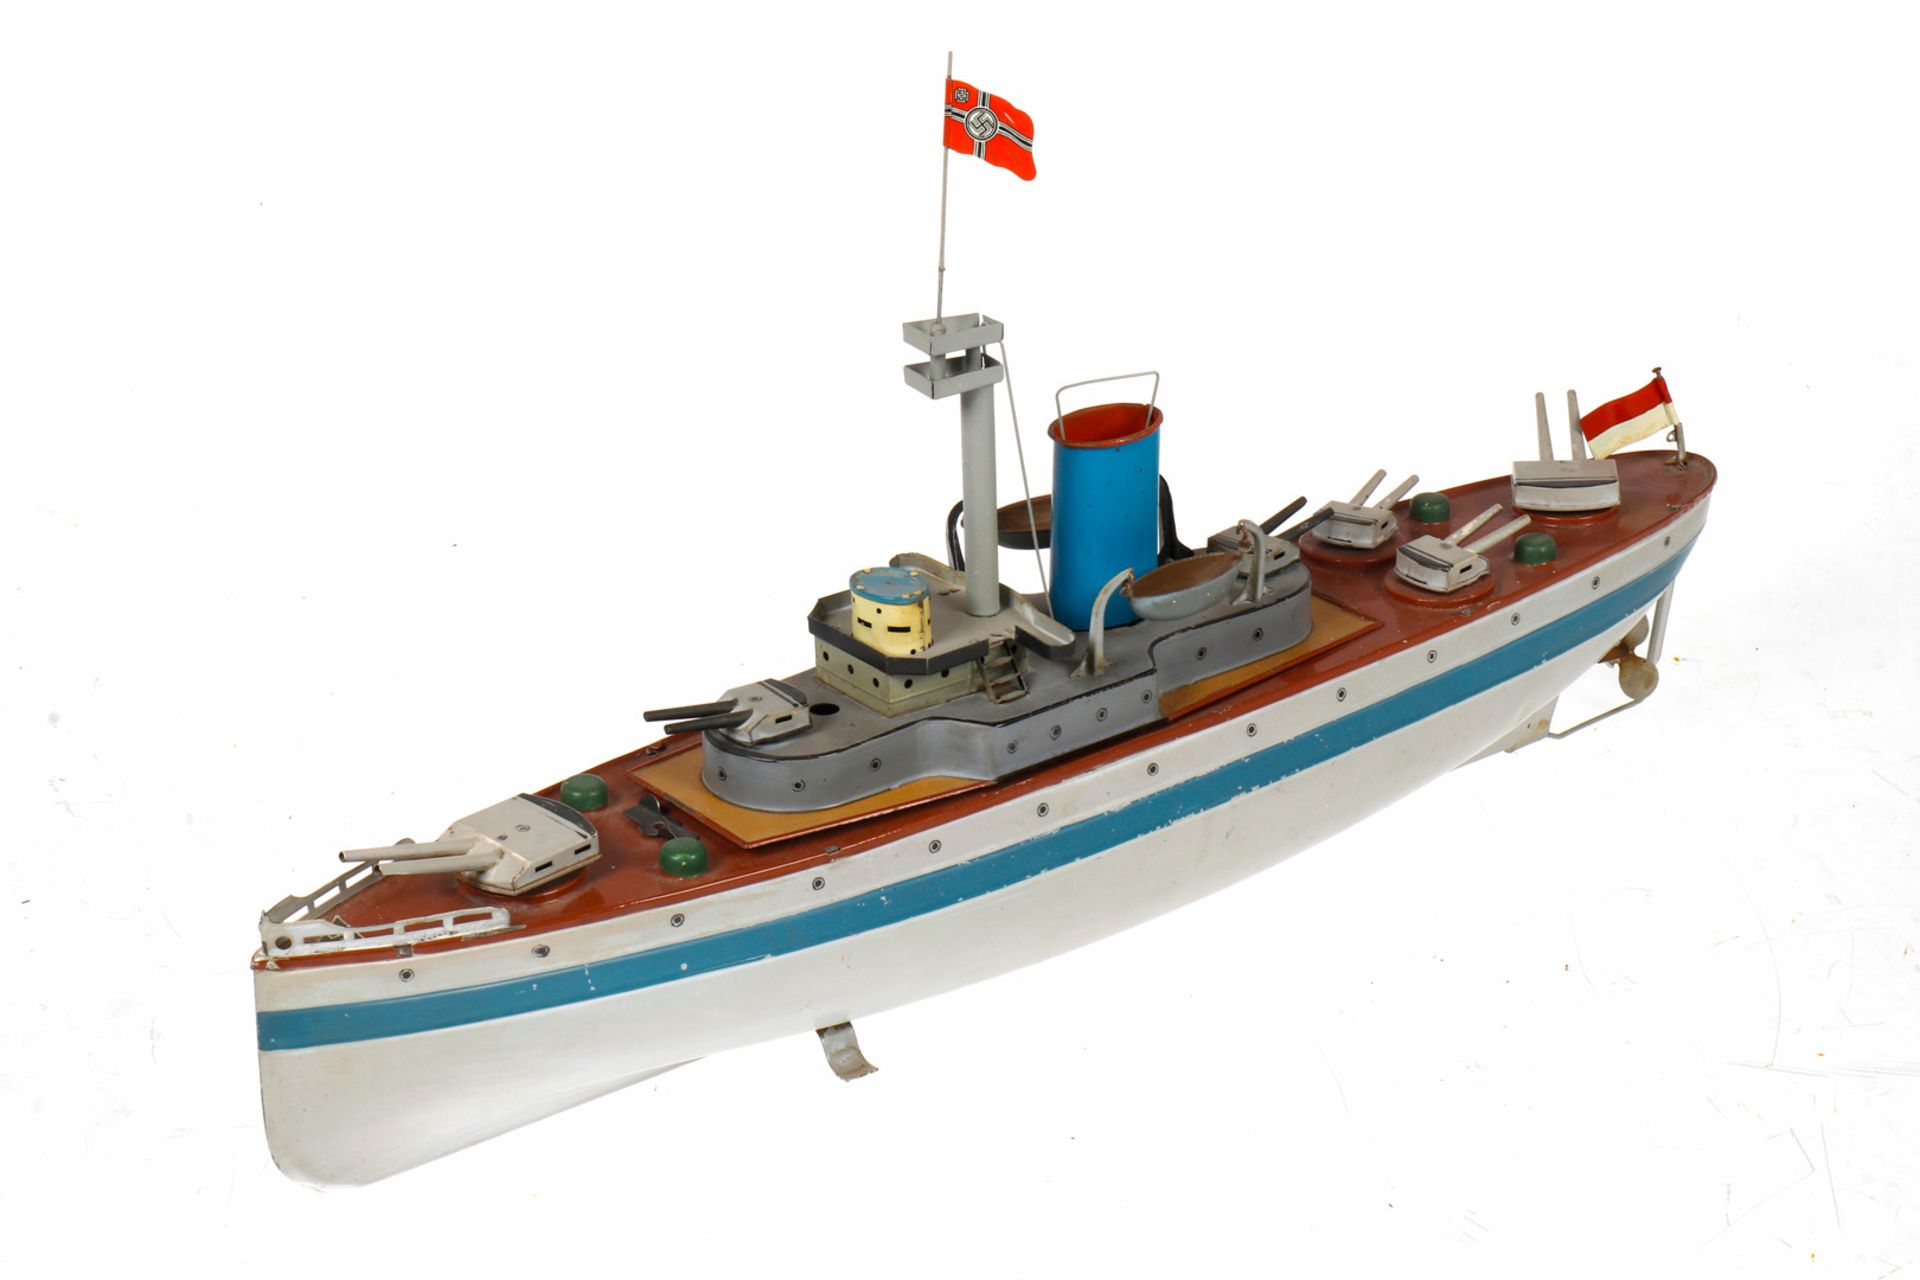 Fleischmann Kanonenboot, handlackiert, Uhrwerk intakt, mit 6 Drehgeschützen, L 50, Z 2